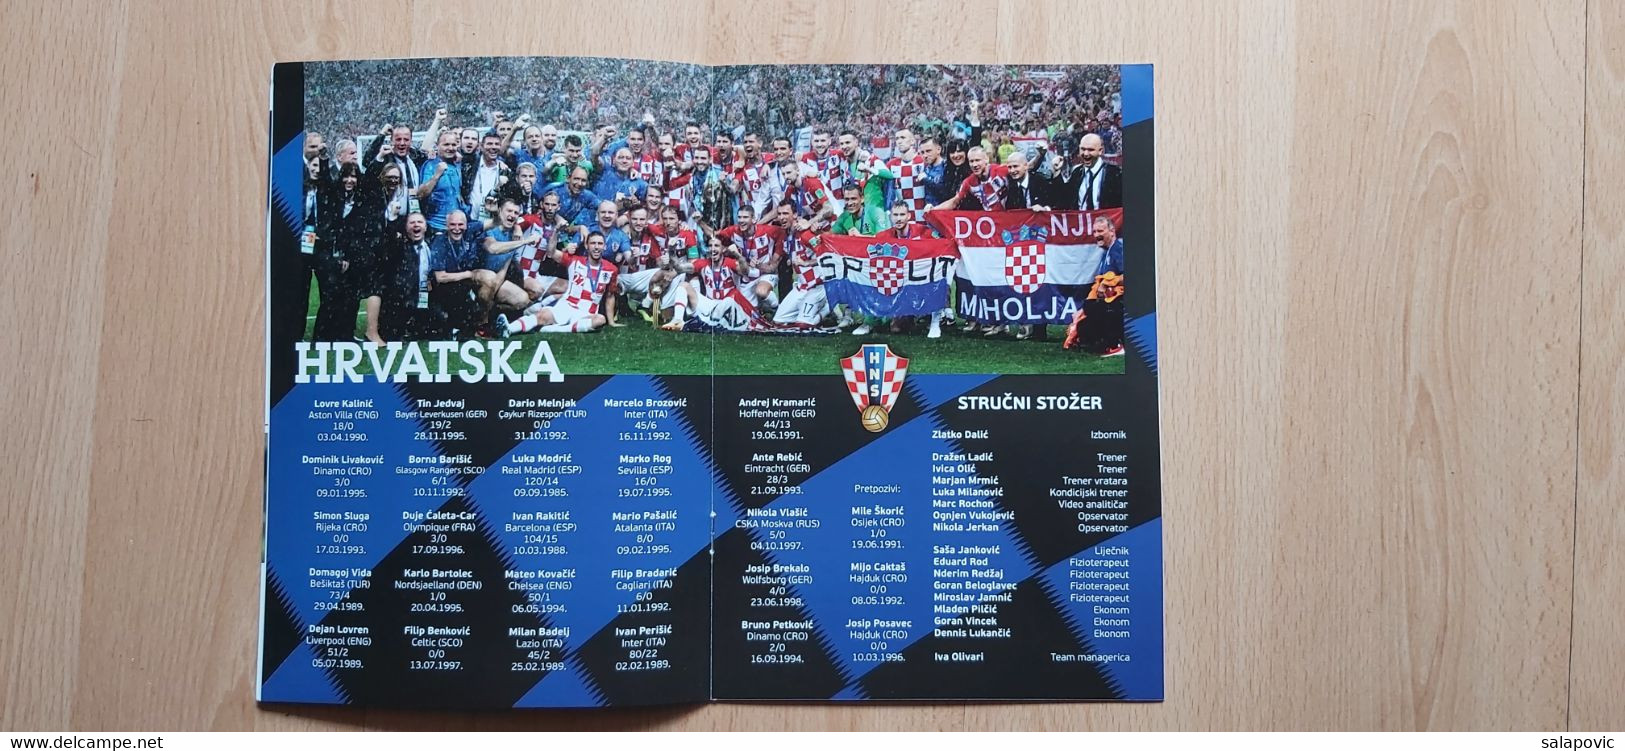 NK OMIS - HRVATSKA, UTAKMICA POVODOM 100 GODINA KLUBA 31. 5. 2019 FOOTBALL CROATIA FOOTBALL MATCH PROGRAM - Libros